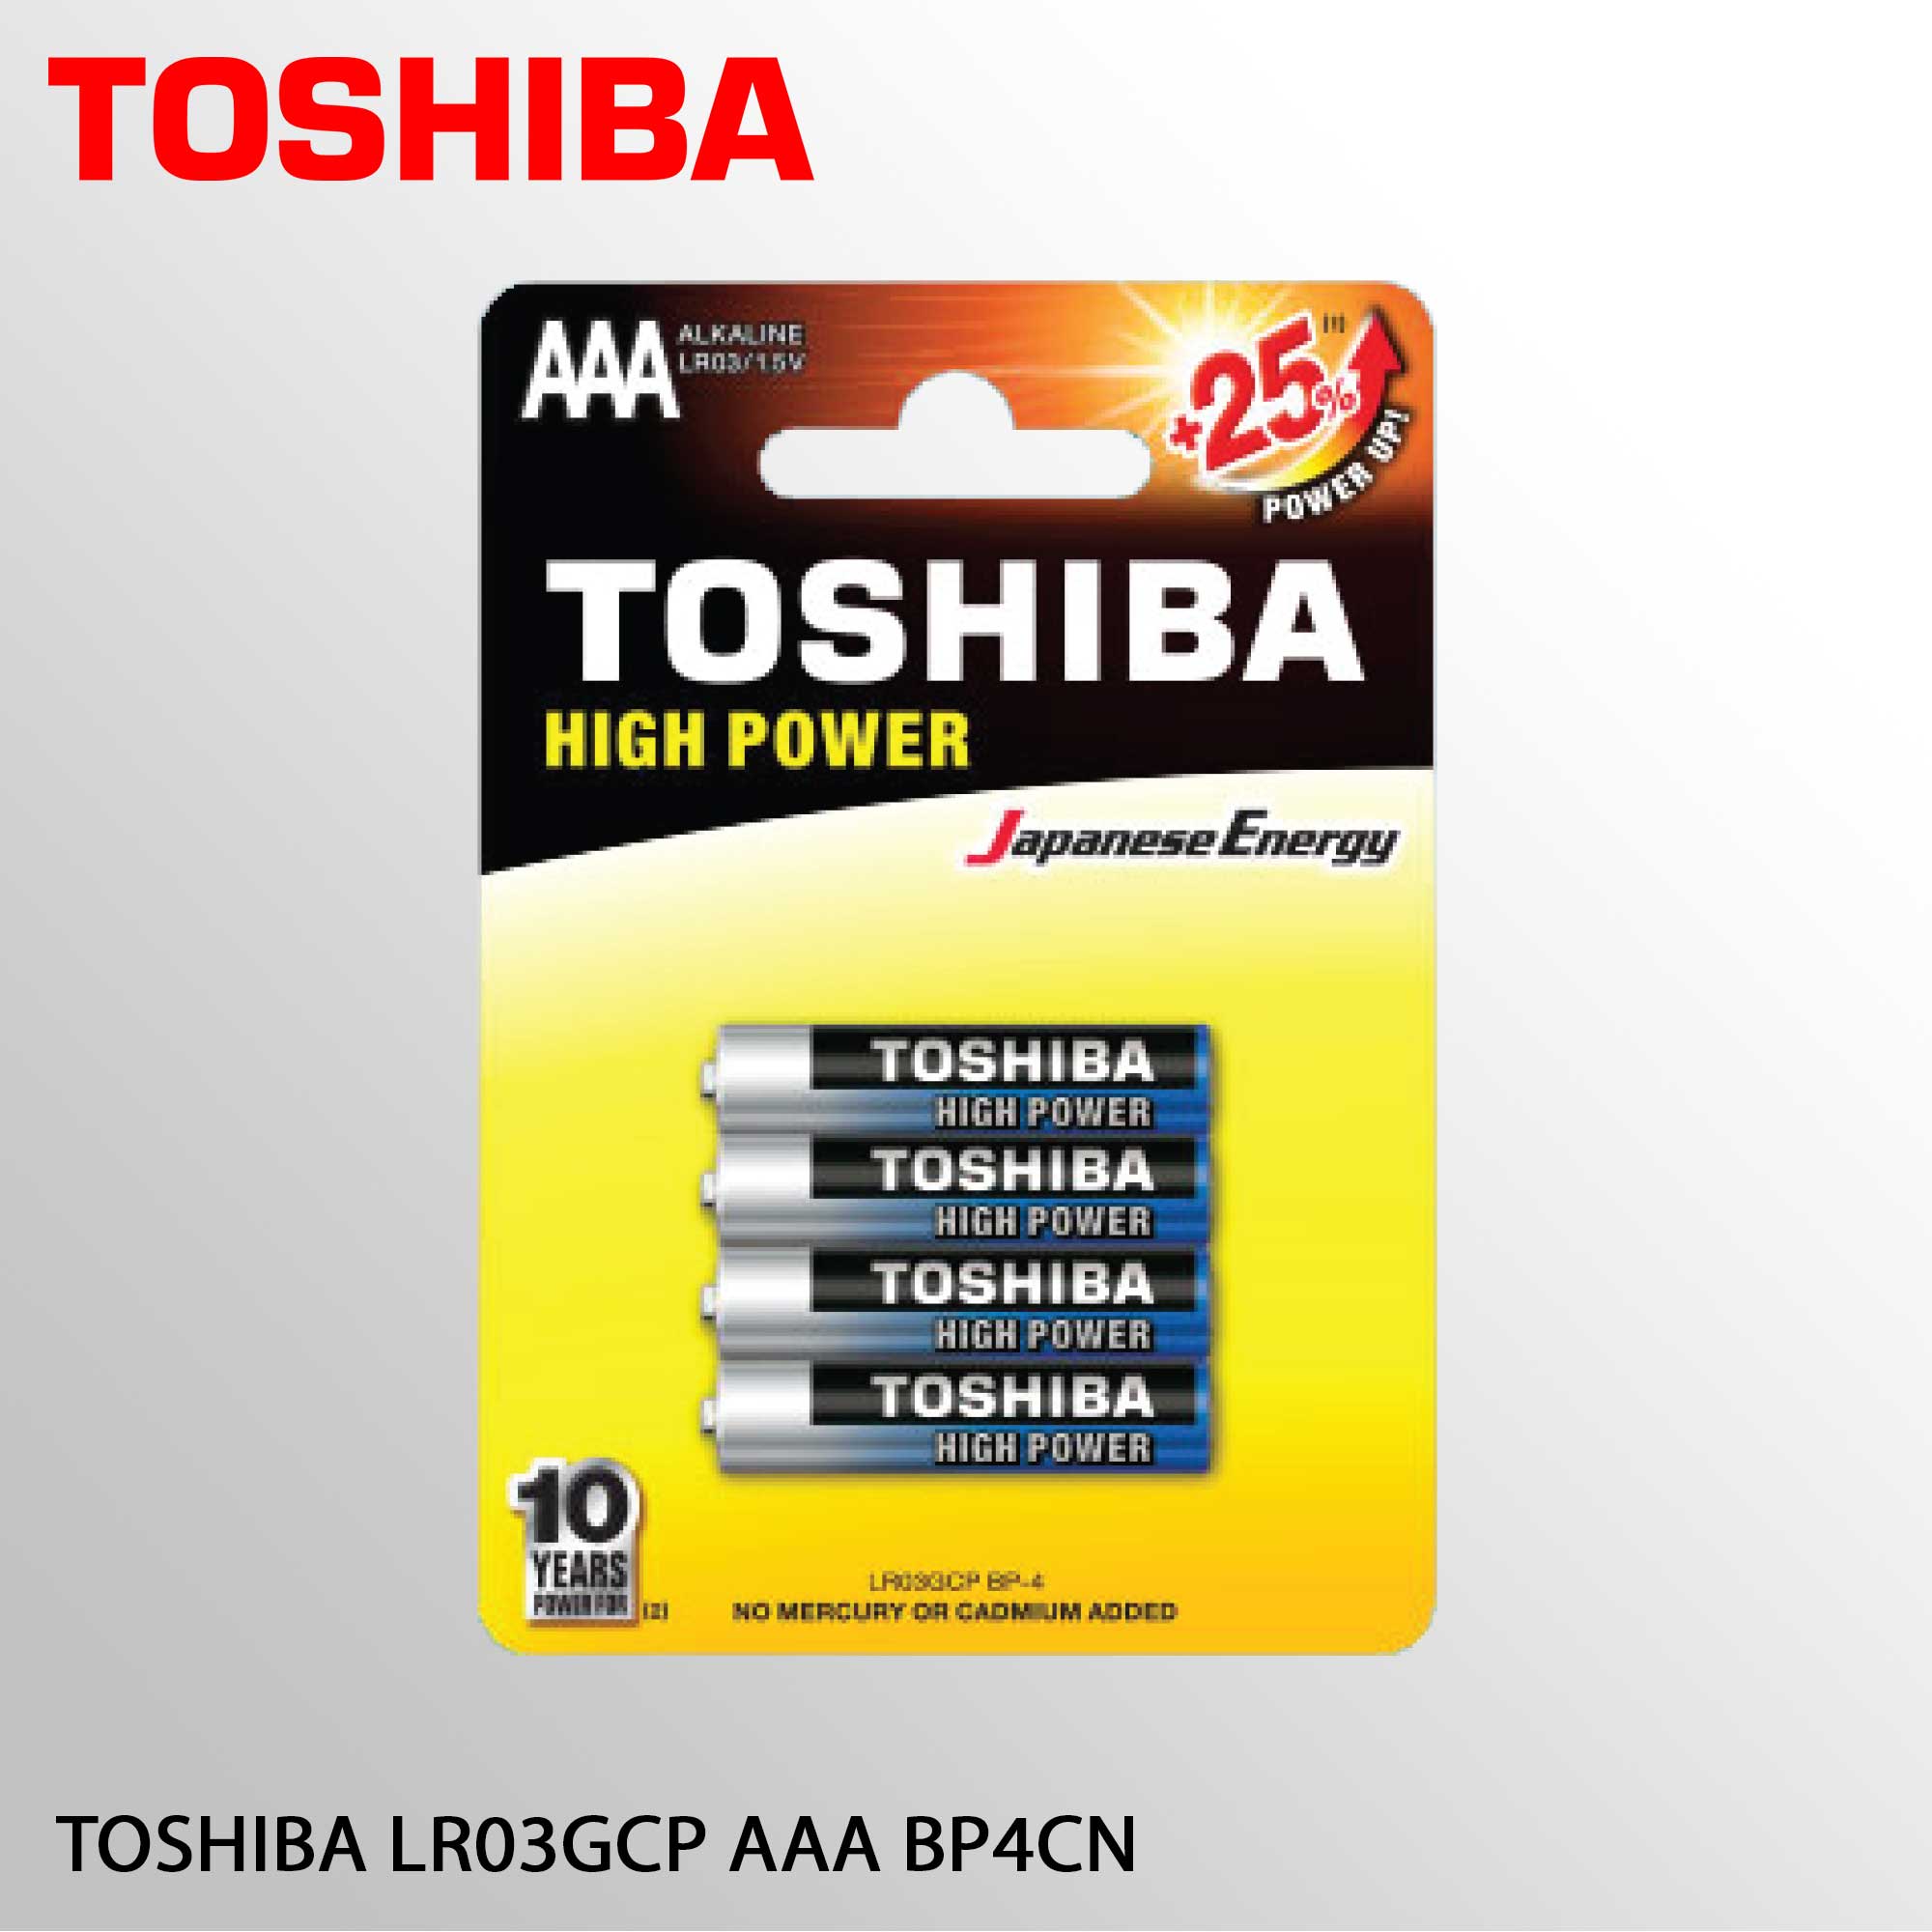 TOSHIBA LR03GCP AAA BP4CN